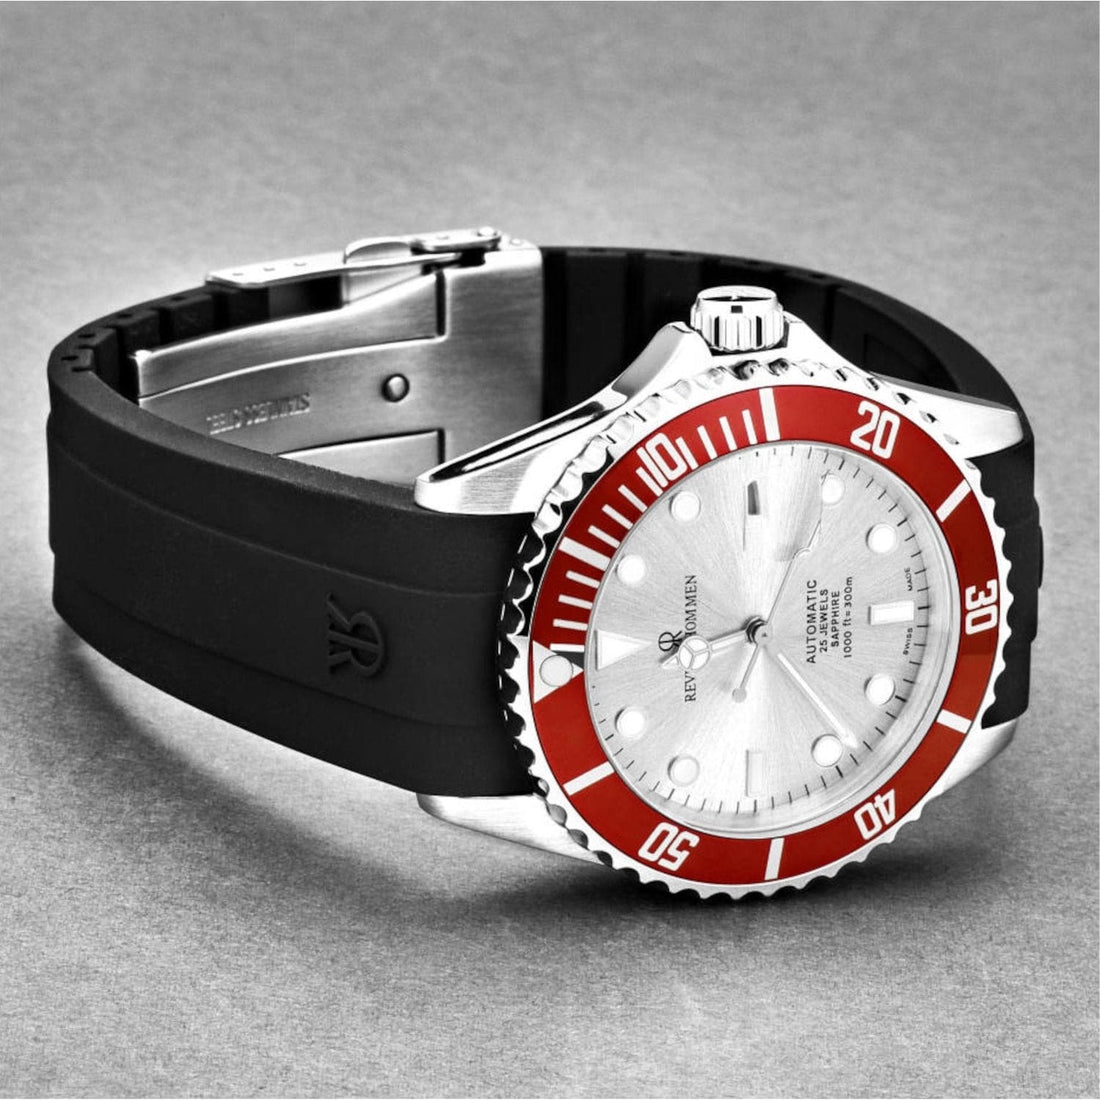 Revue Thommen 17571.2826 Men's 'Diver' Silver Dial Rubber Strap Swiss Automatic Watch